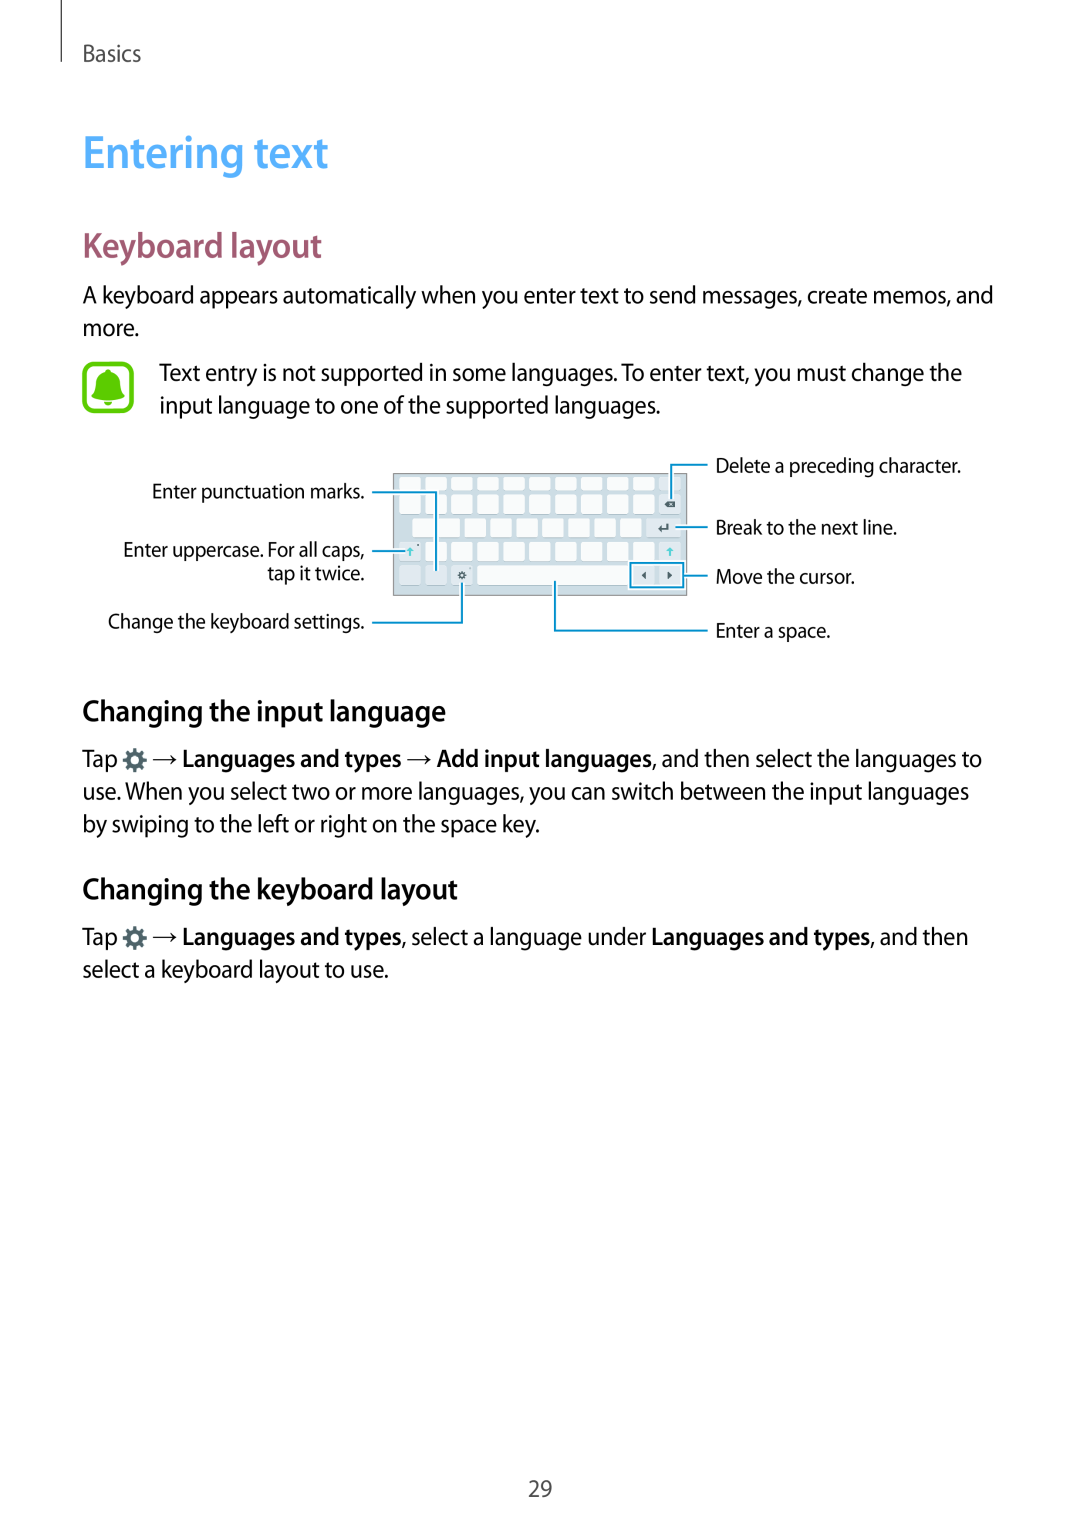 Samsung SM-T719NZWENEE Entering text, Keyboard layout, Changing the input language, Changing the keyboard layout, Basics 